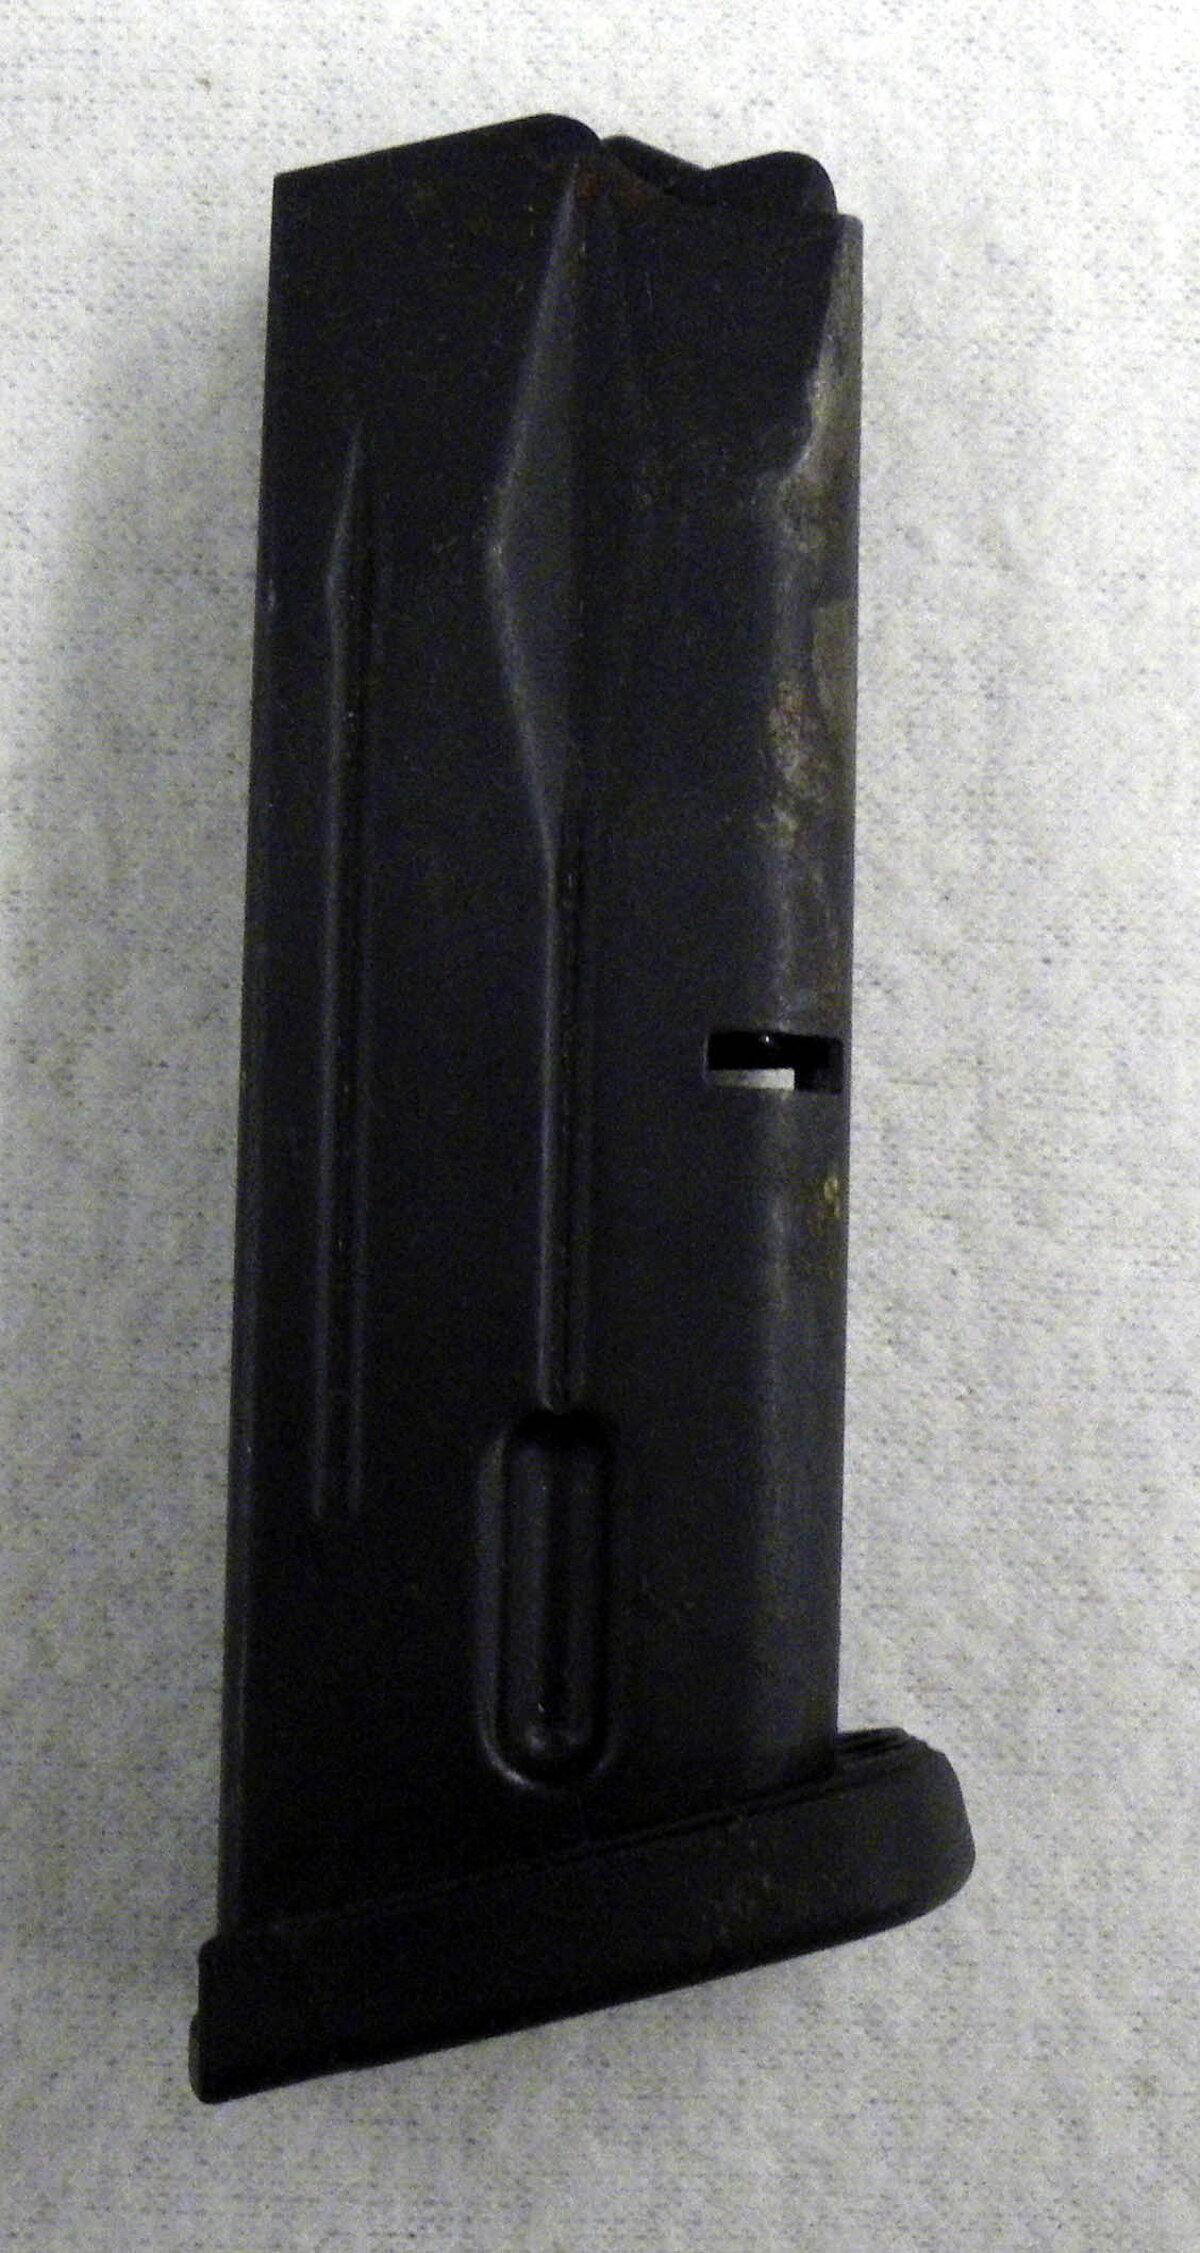 Magazin Beretta P9000 9mm Luger